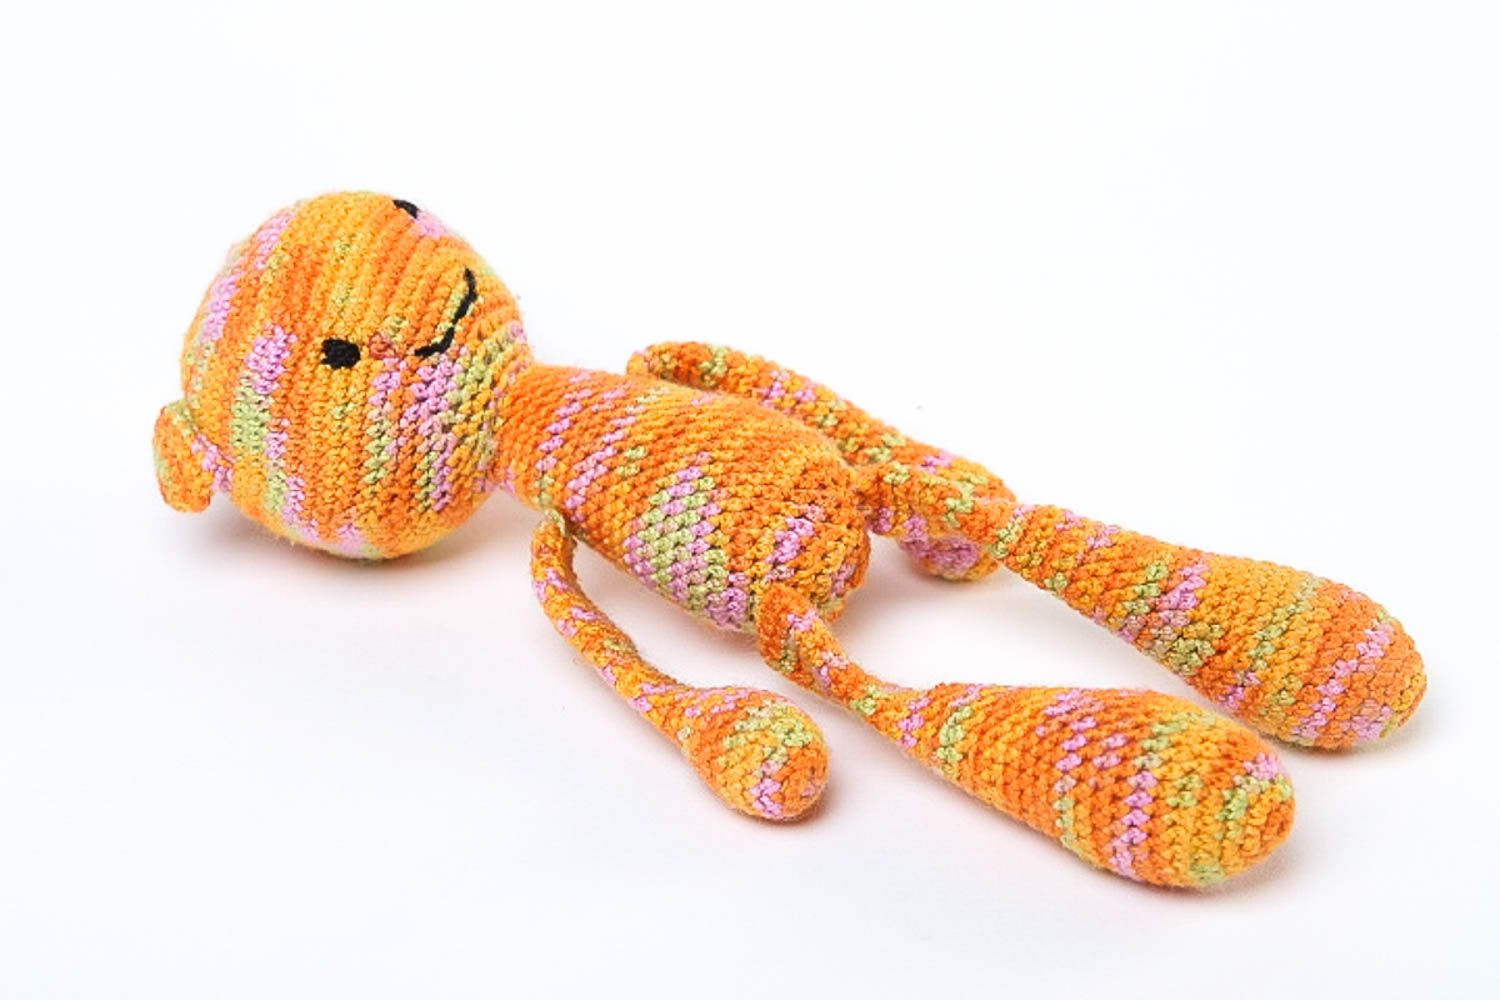 Handmade crocheted soft toy for babies nursery decor ideas stuffed baby toy photo 2